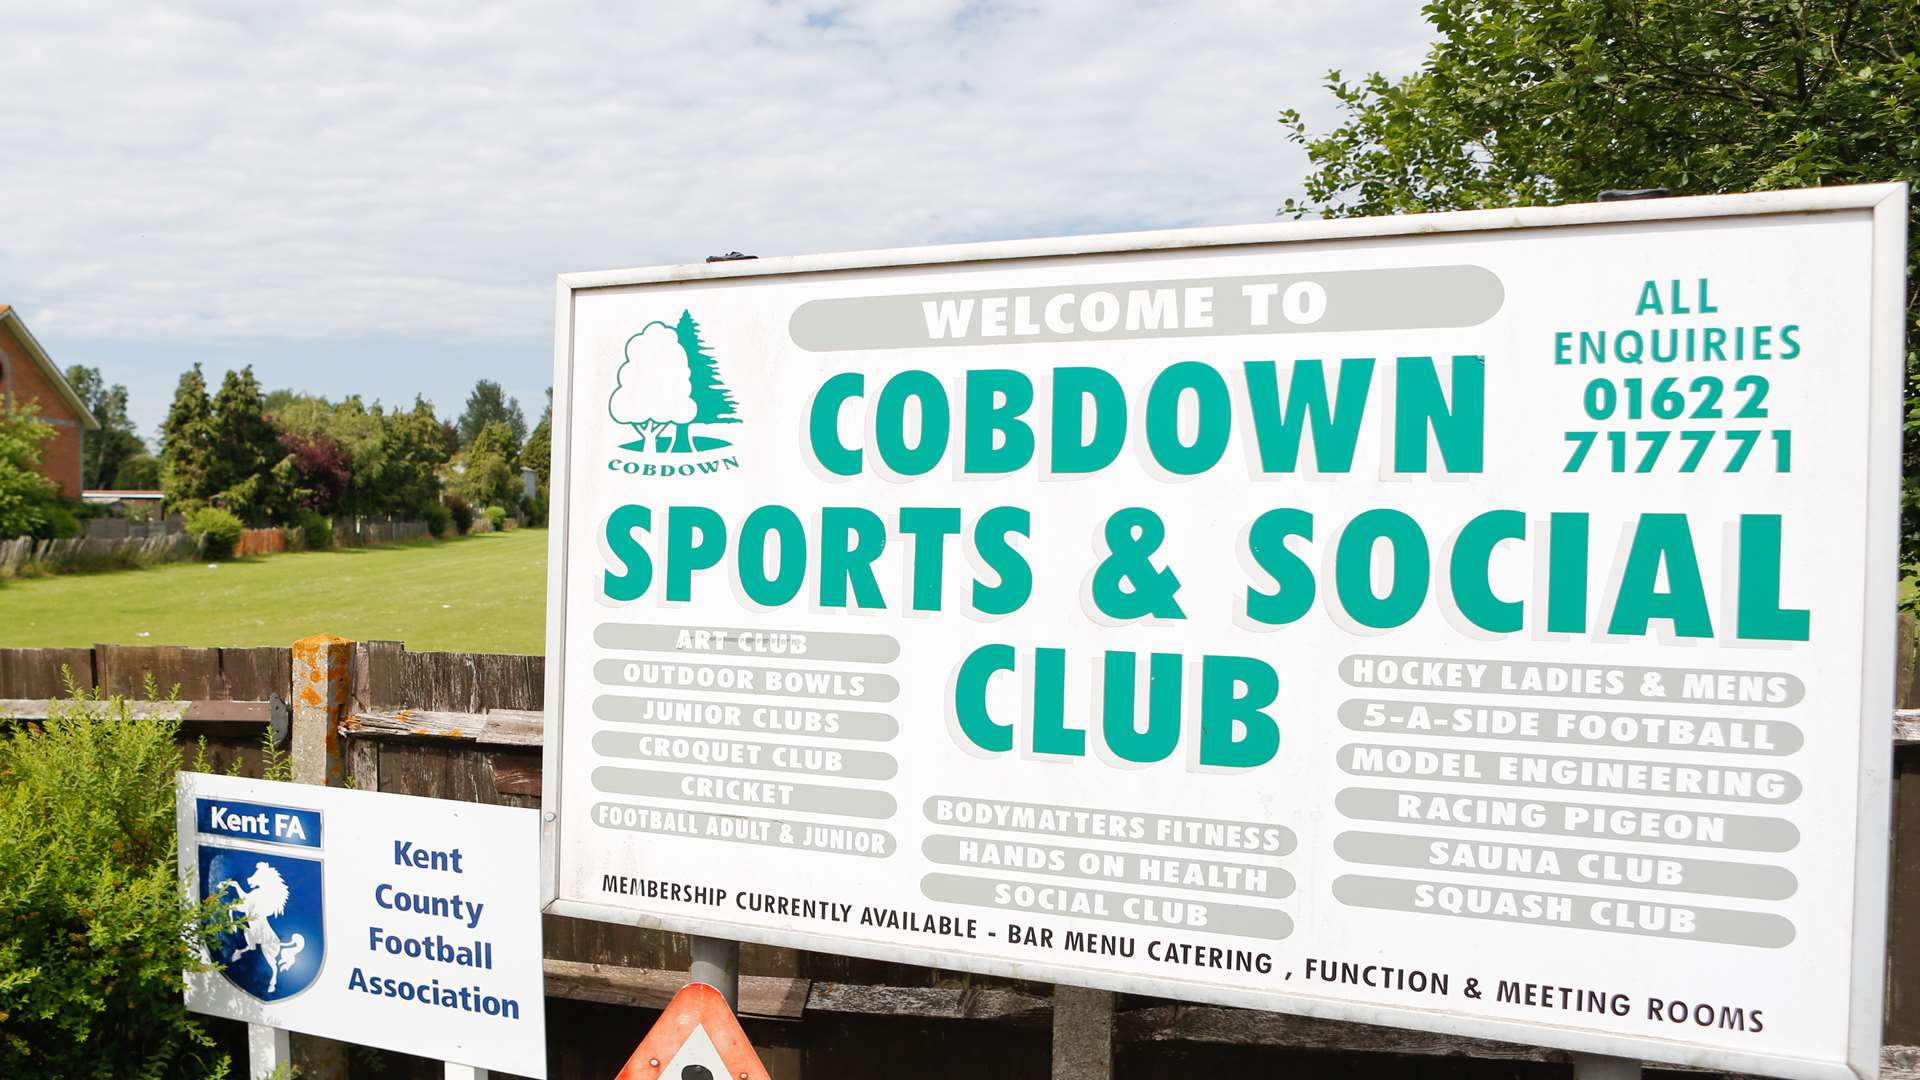 Cobdown Sports and Social Club